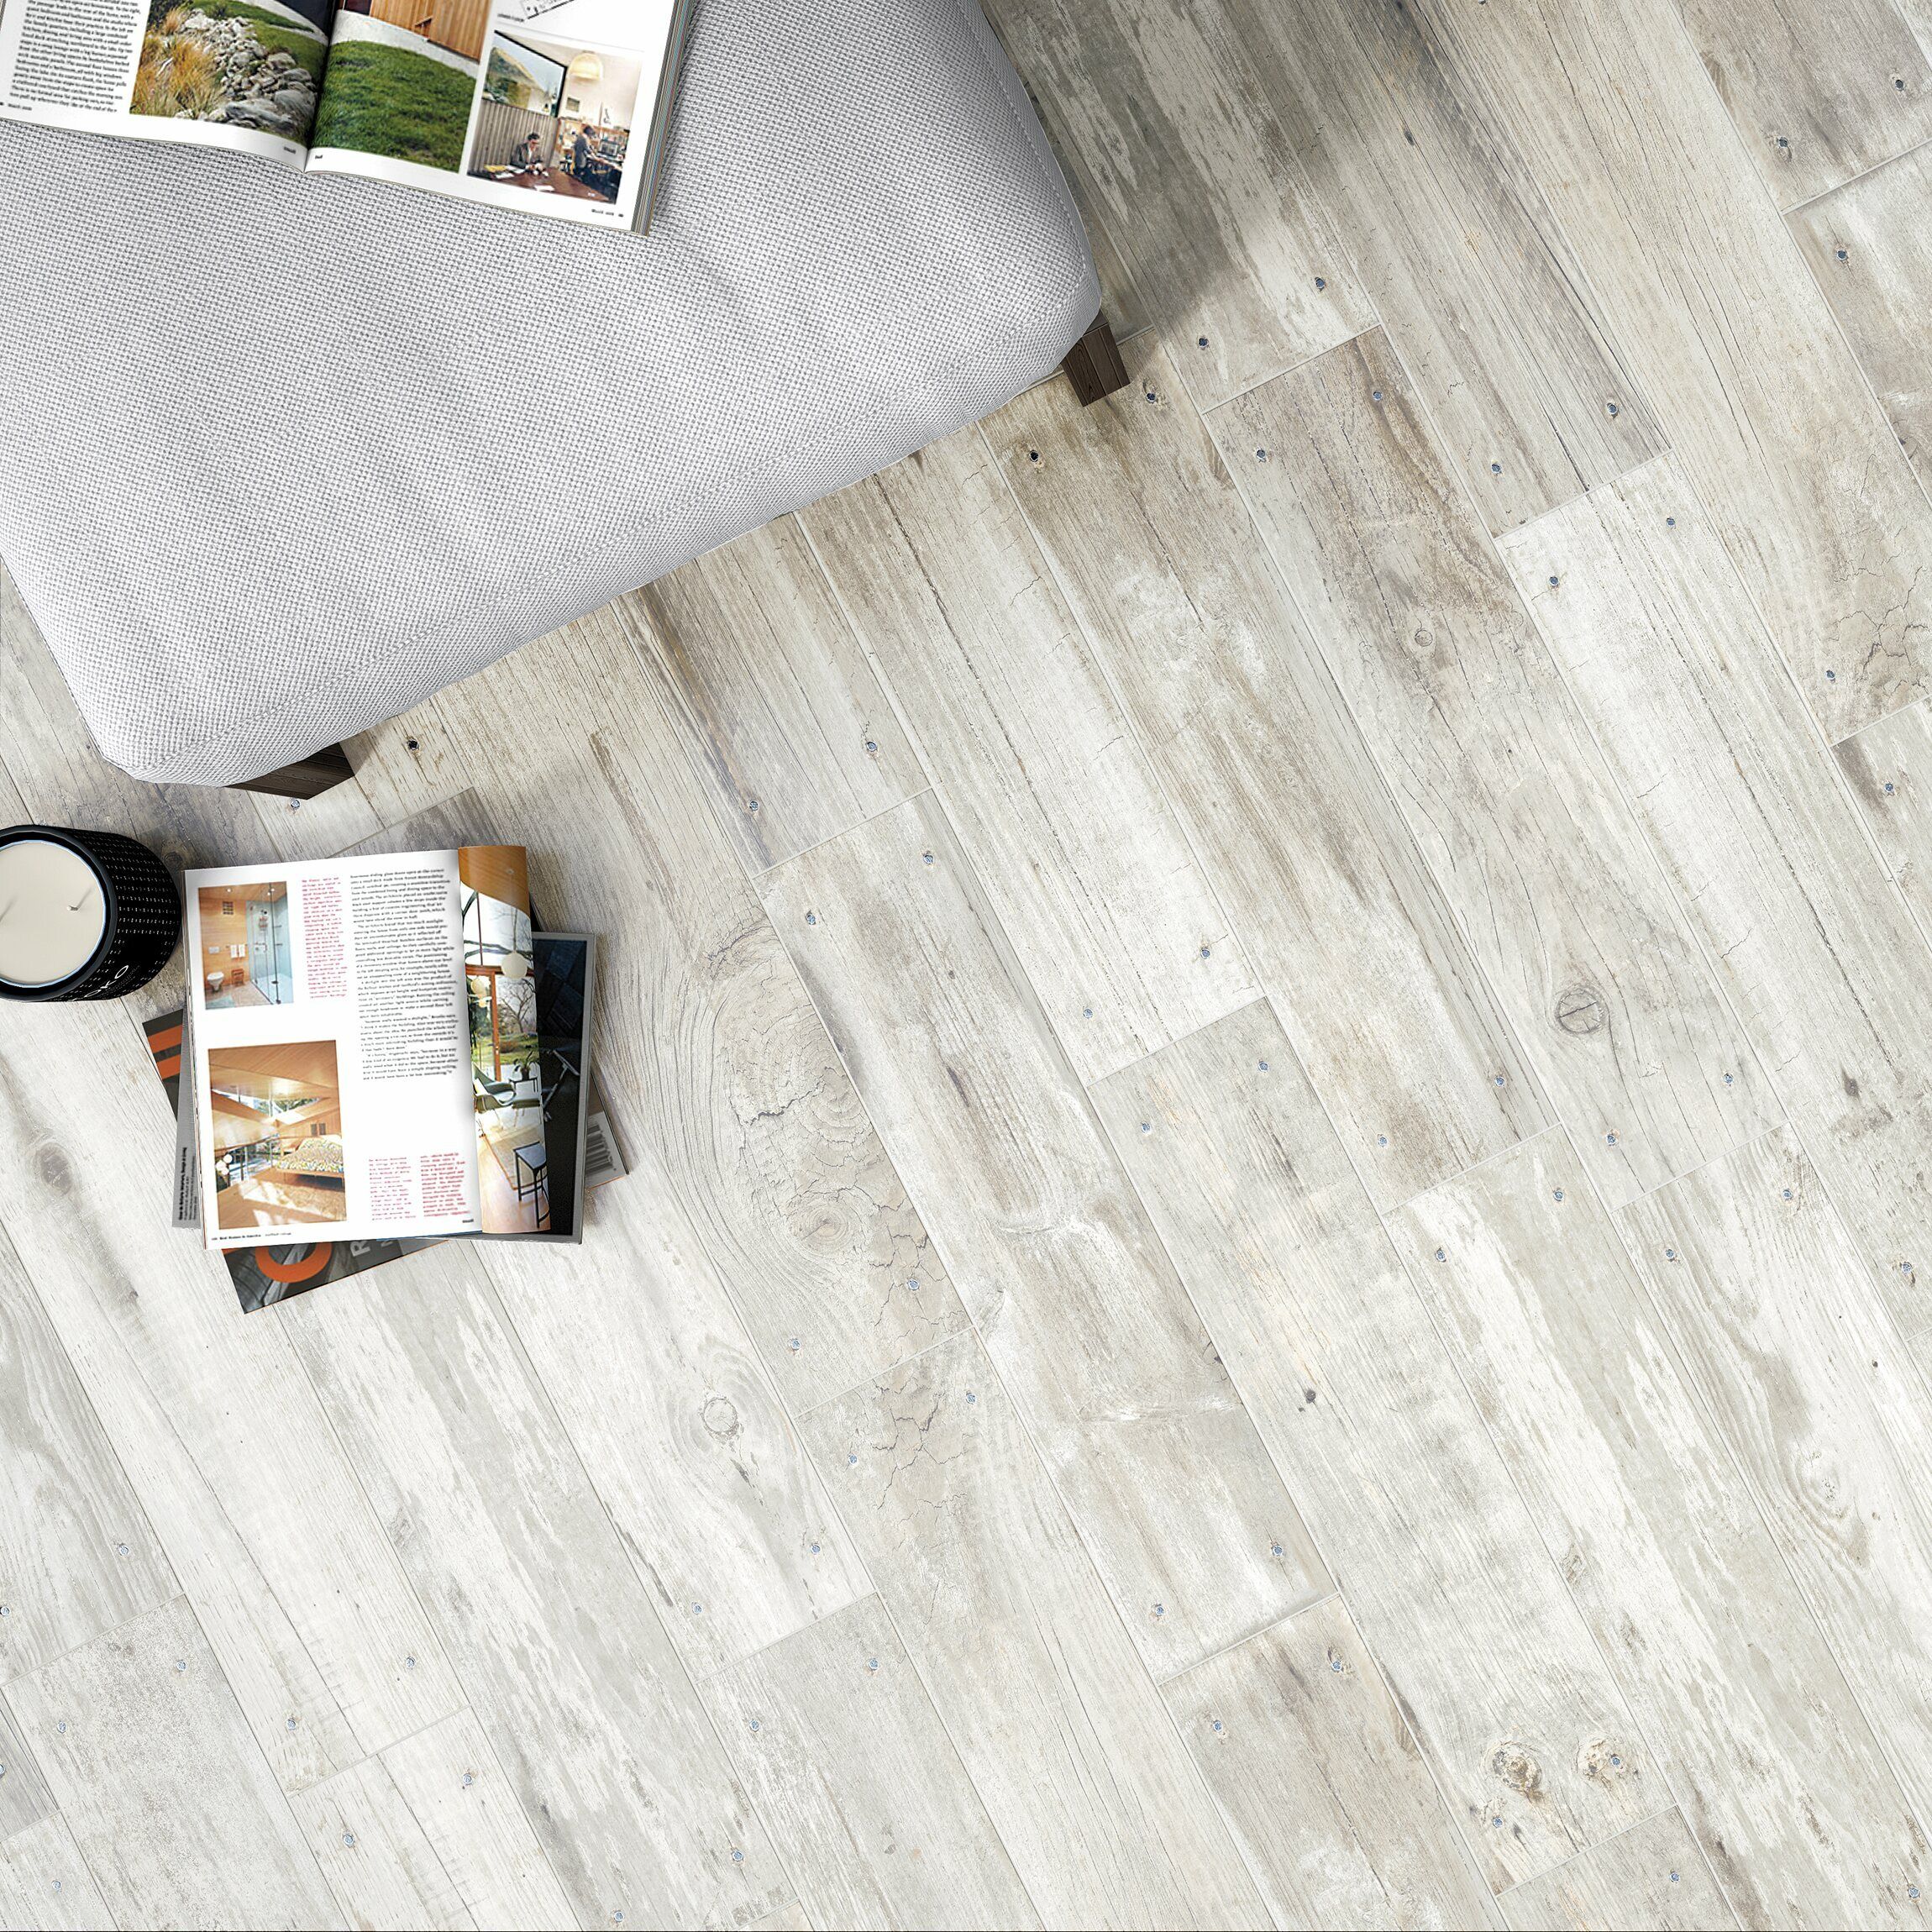 Reclaimed White Oak Nailed Wood Effect, Wood Effect Tile Flooring Uk